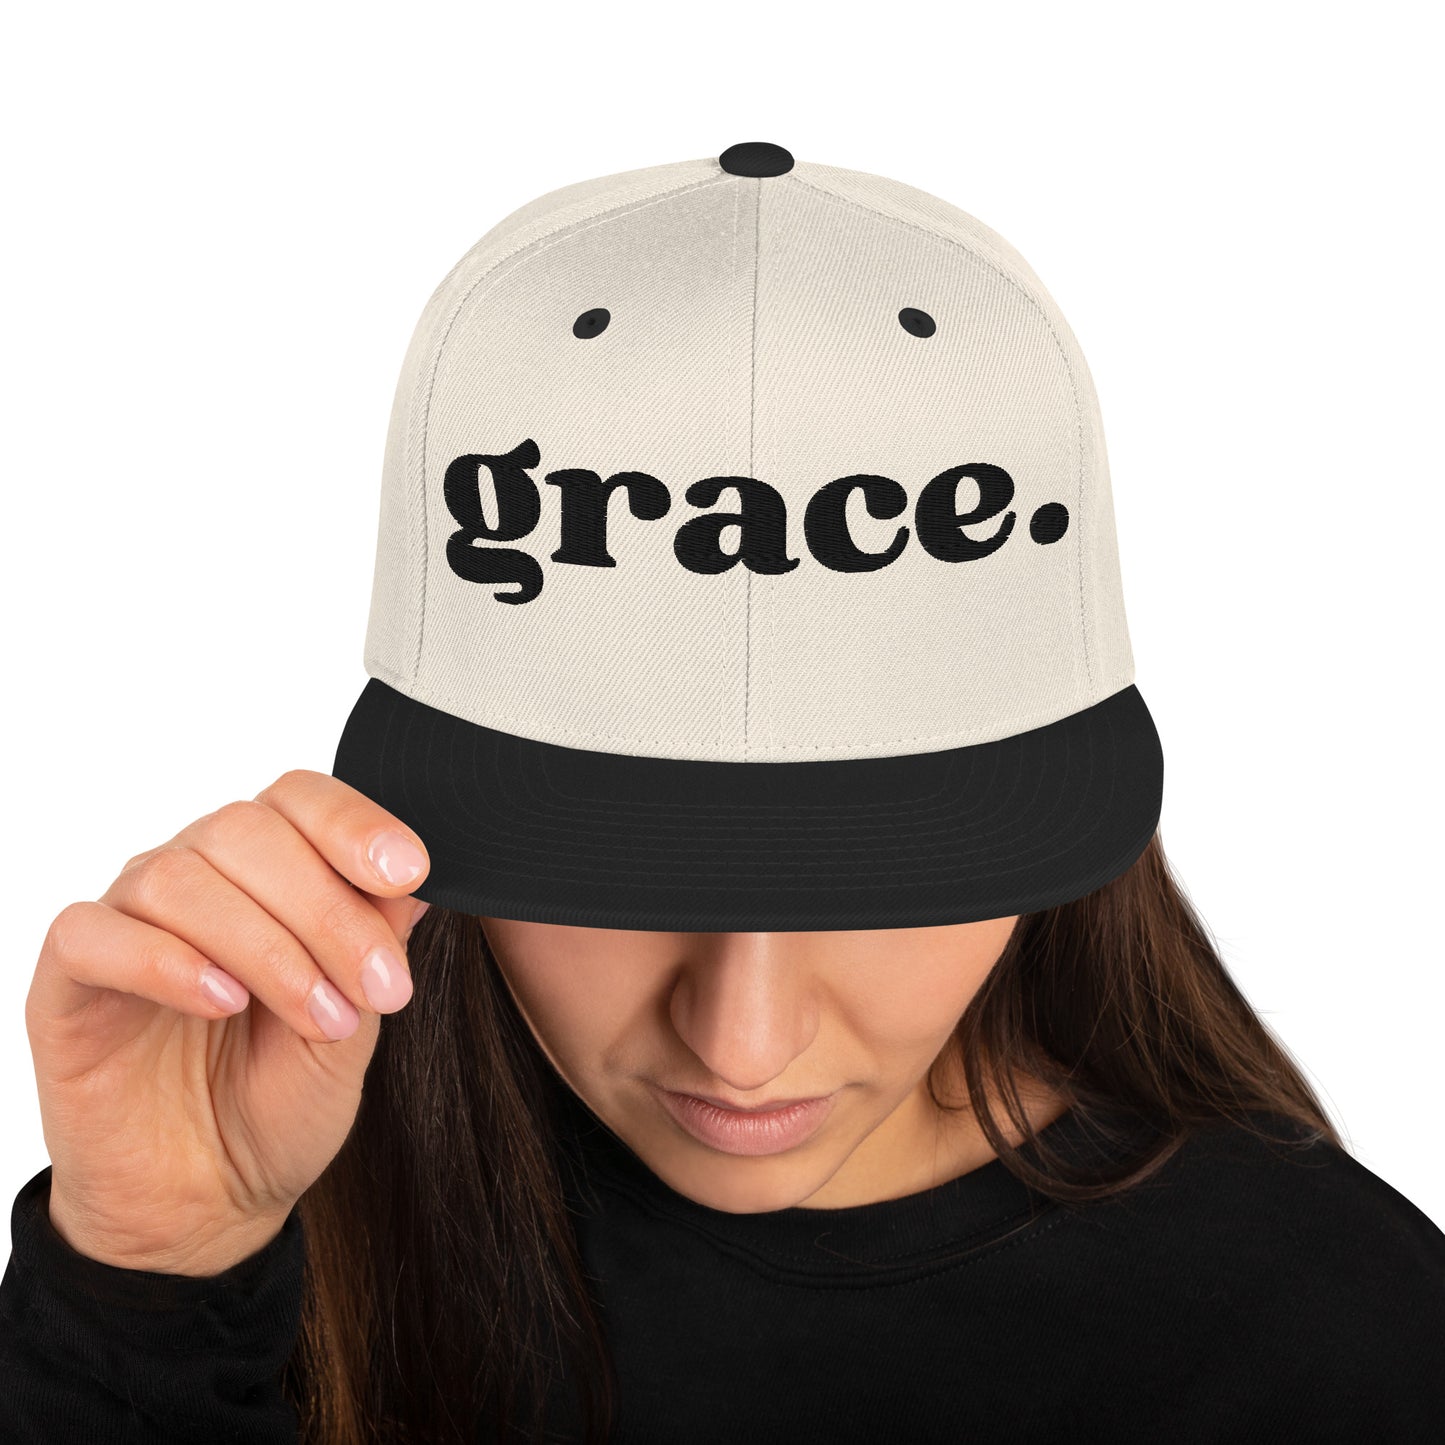 Grace Snapback - Natural/Black